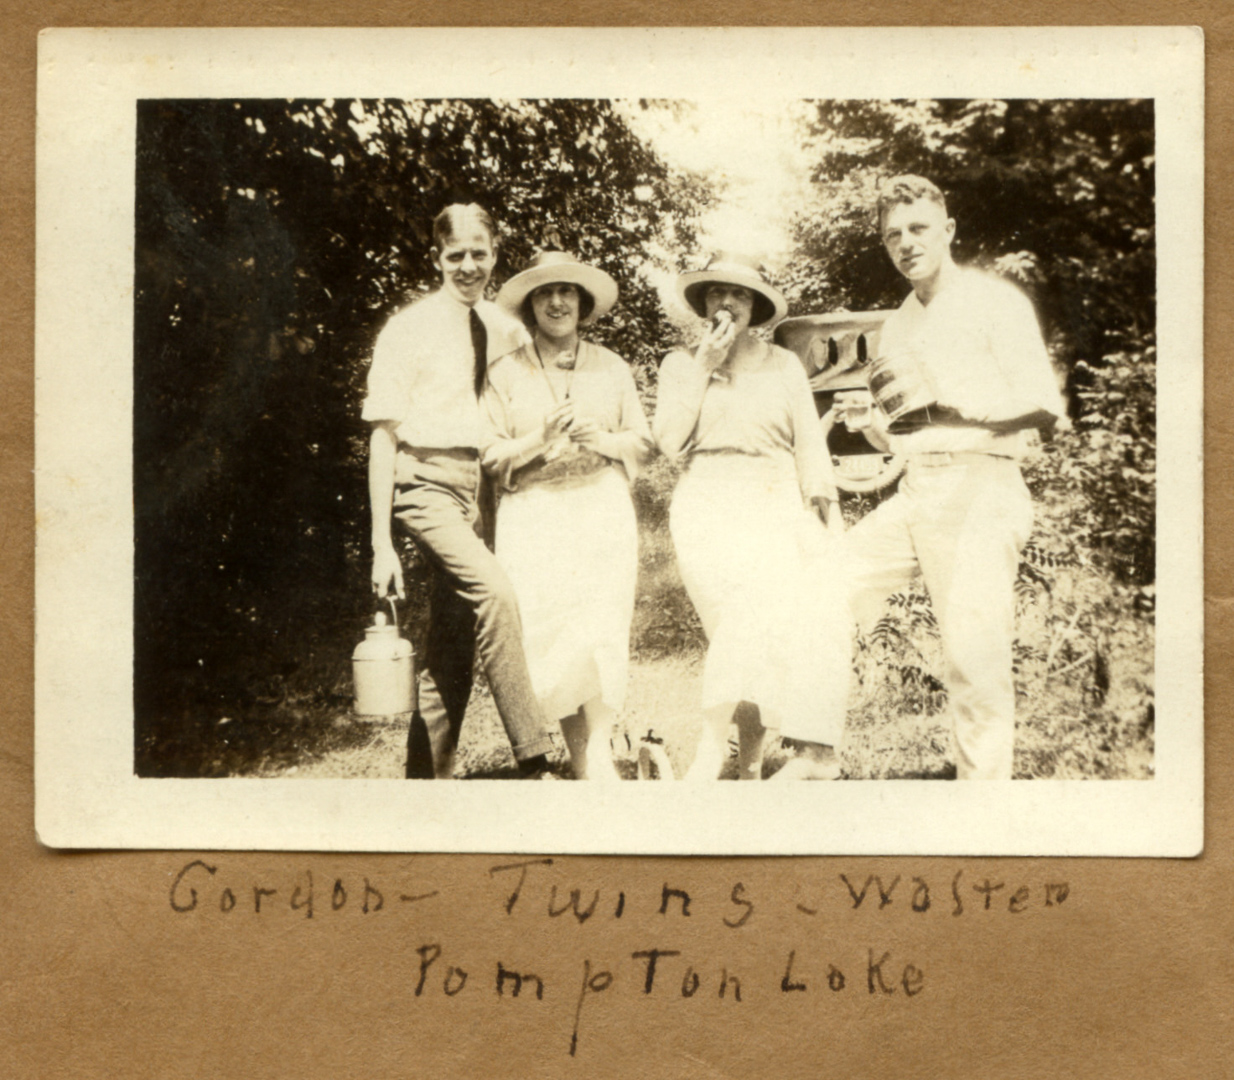 Gordon, Twins & Walter at Pompton Lake